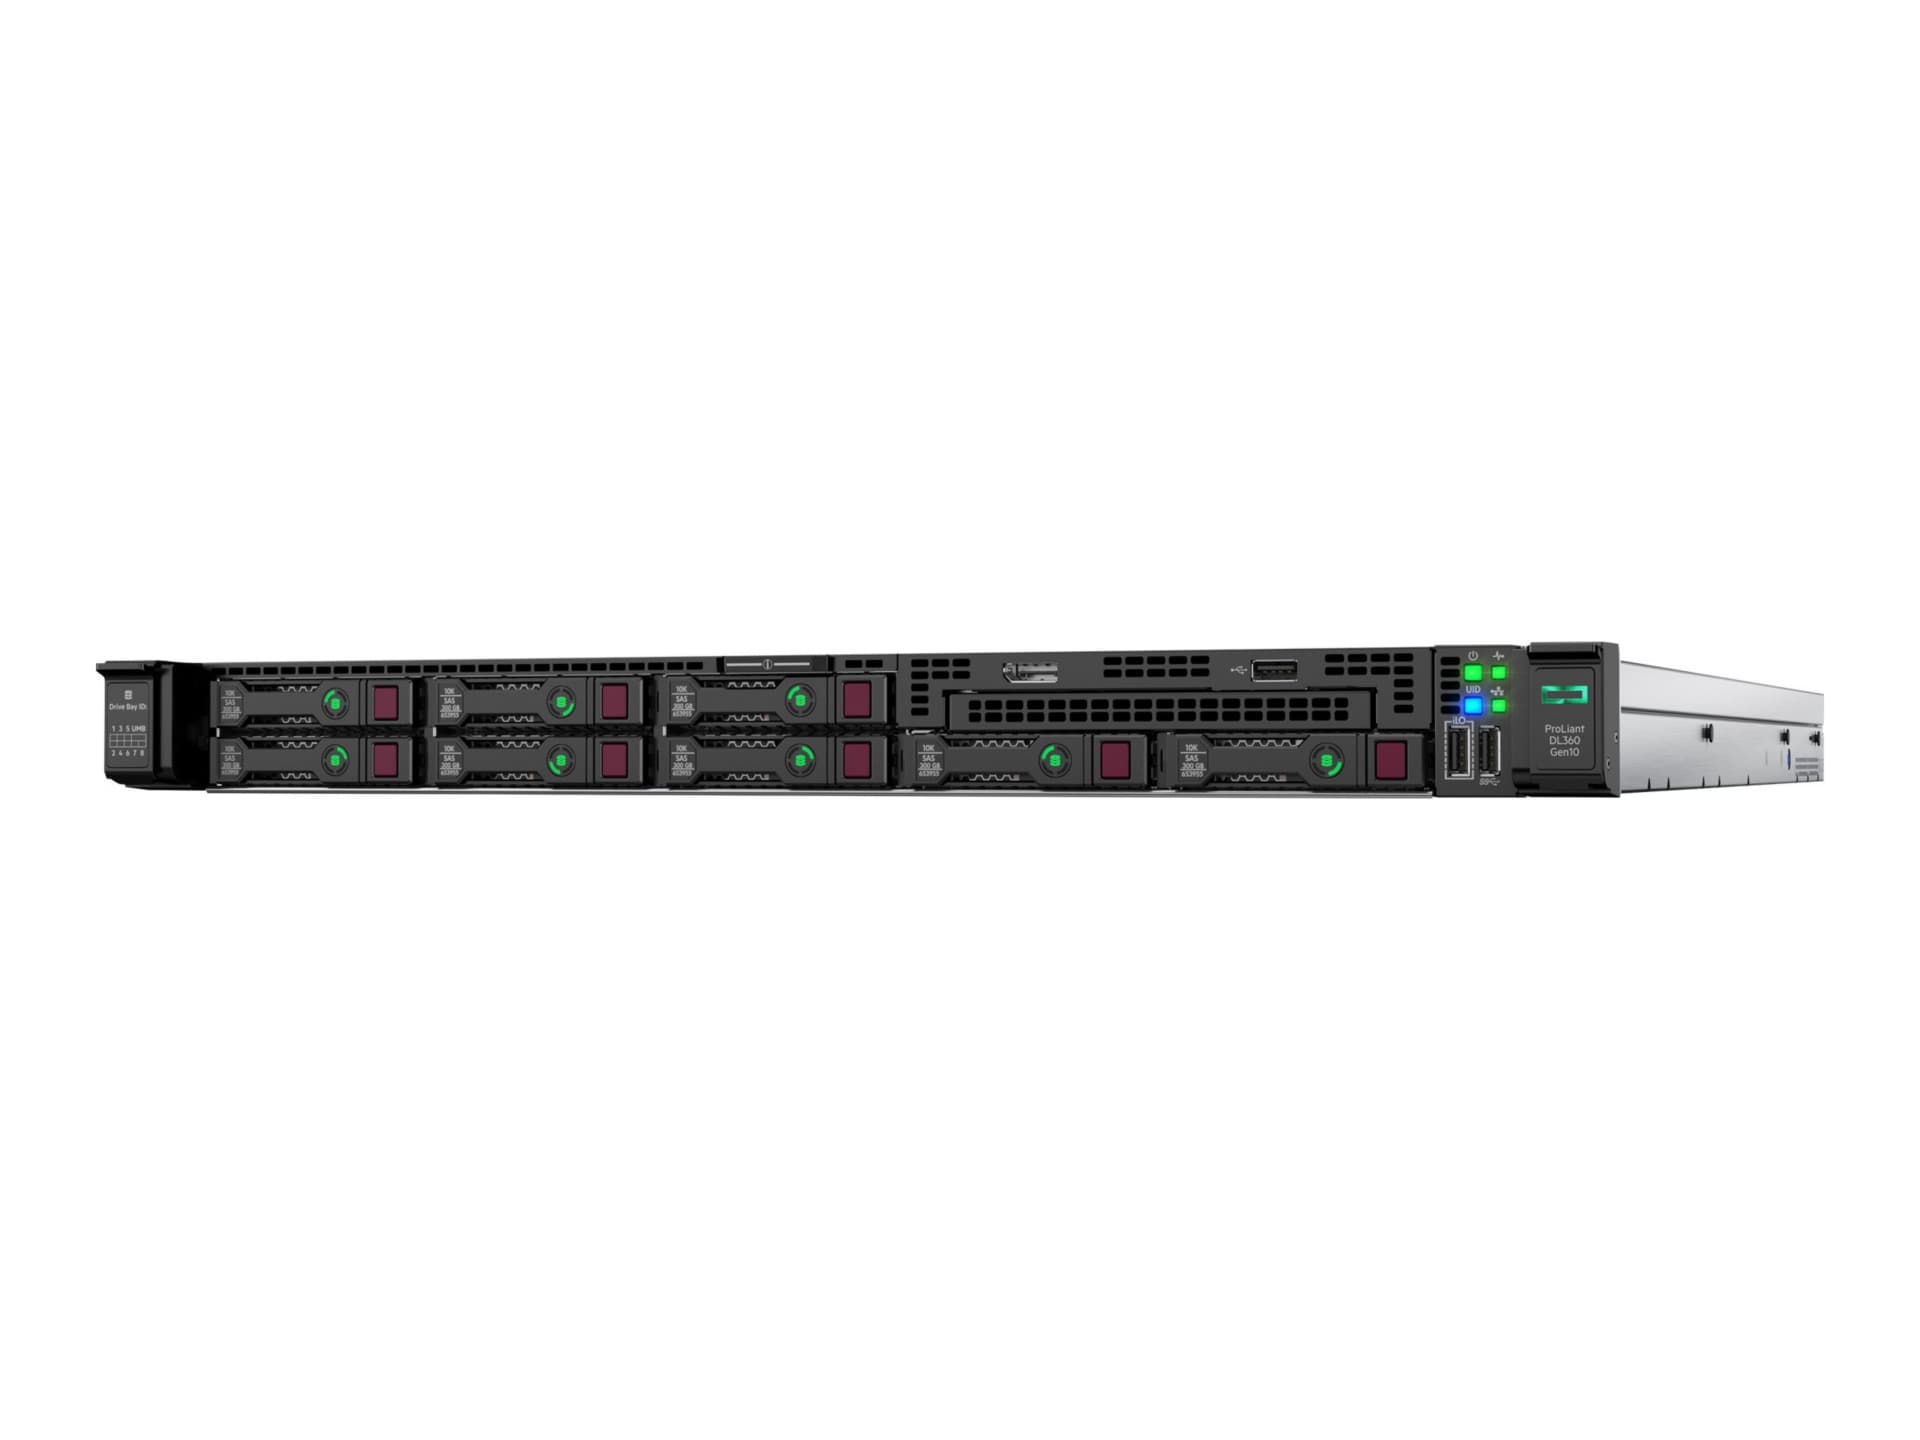 HPE ProLiant DL360 Gen10 Network Choice - rack-mountable - Xeon Gold 6226R